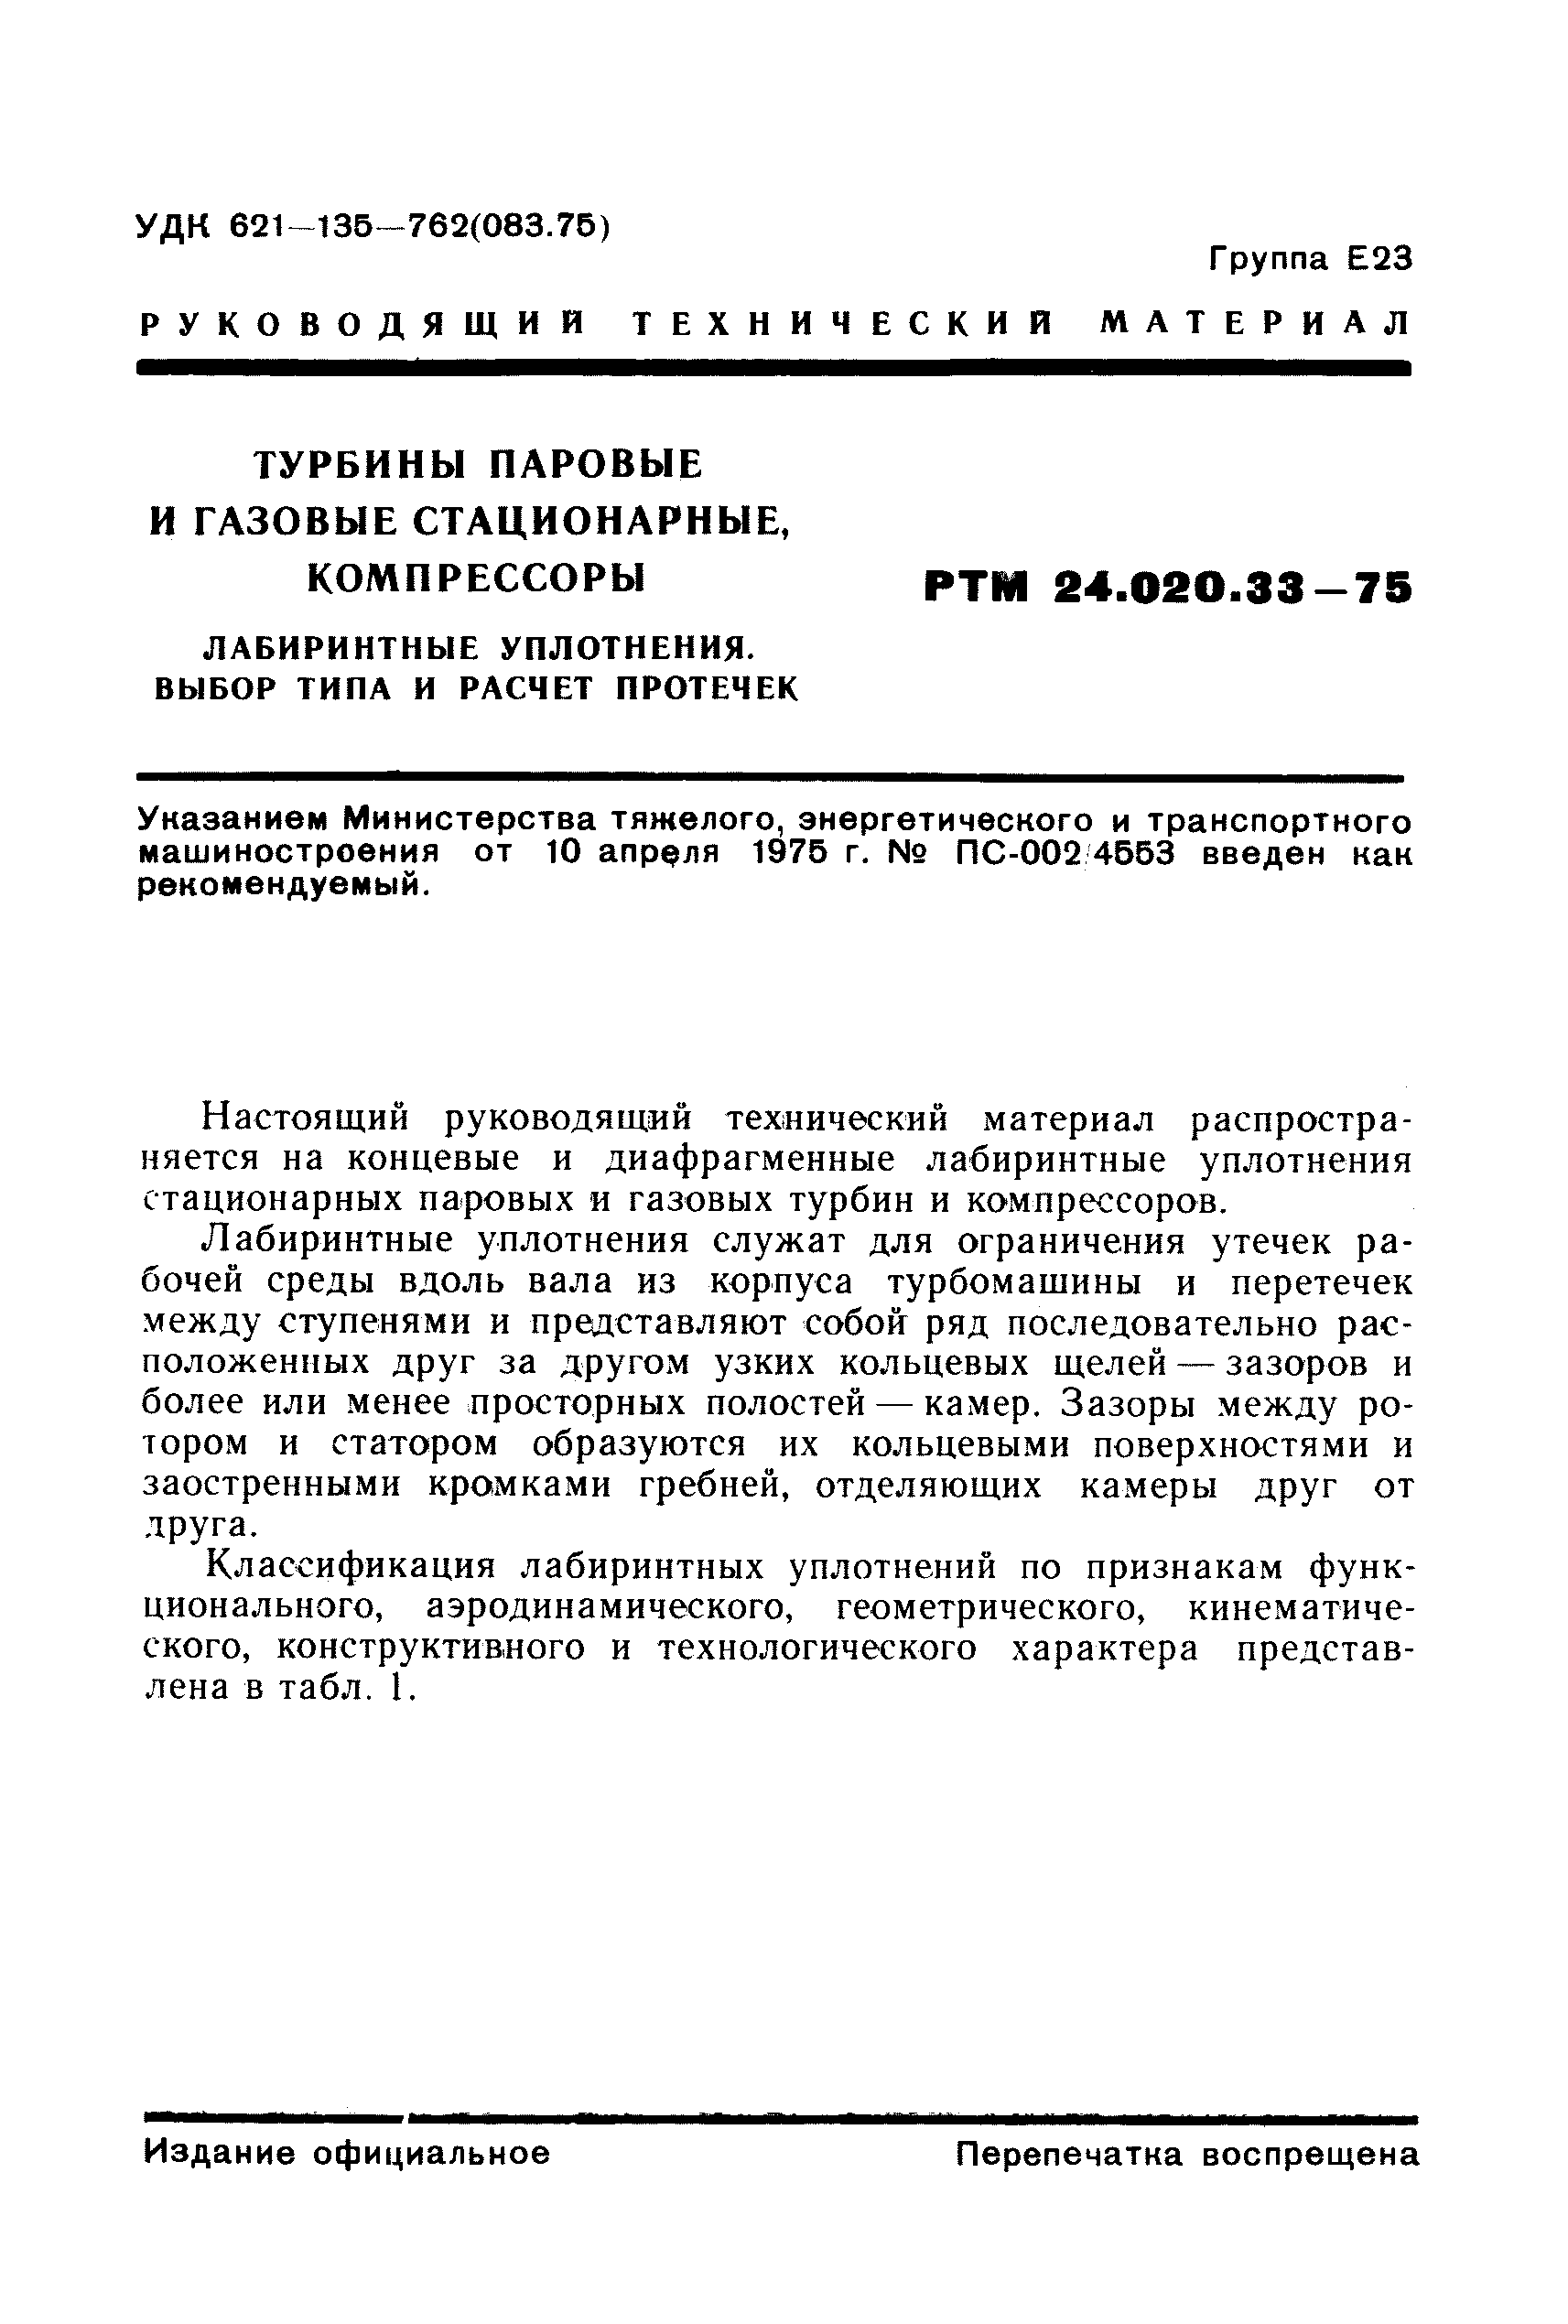 РТМ 24.020.33-75